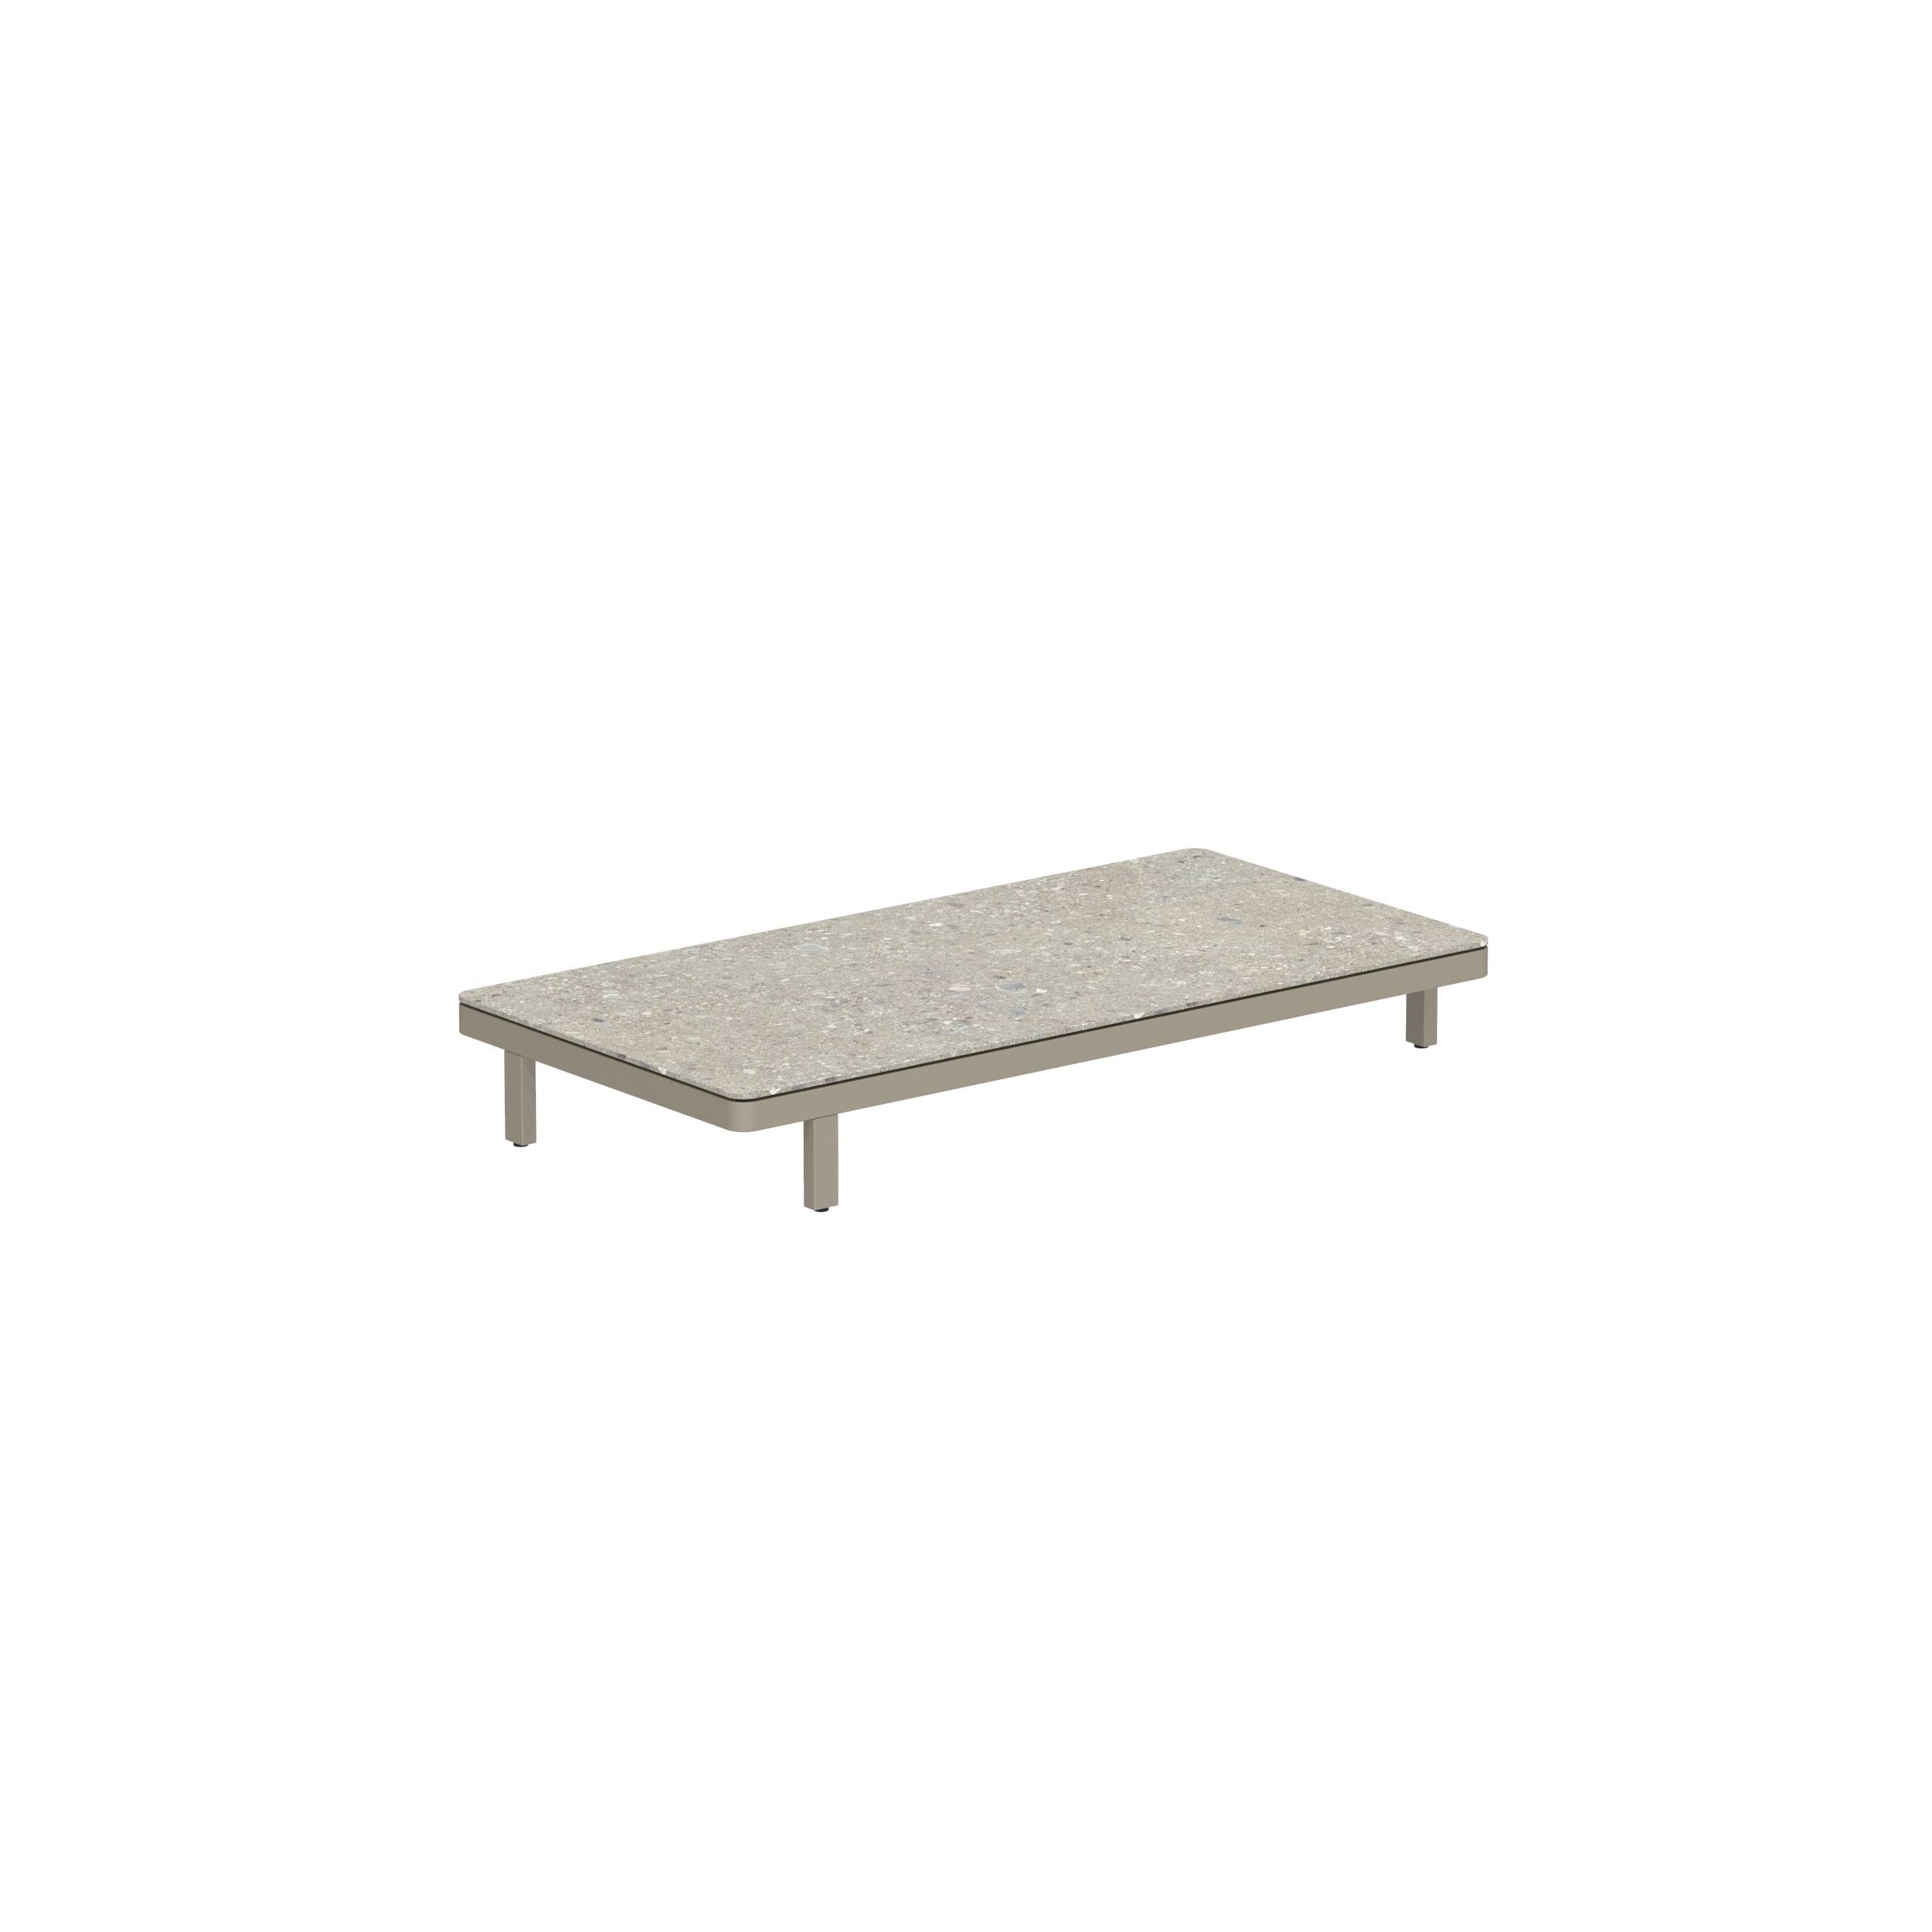 Alura Lounge 160 Ltl Table 160x80x23cm Sand Ceramic Tabletop Ceppo Dolomitica